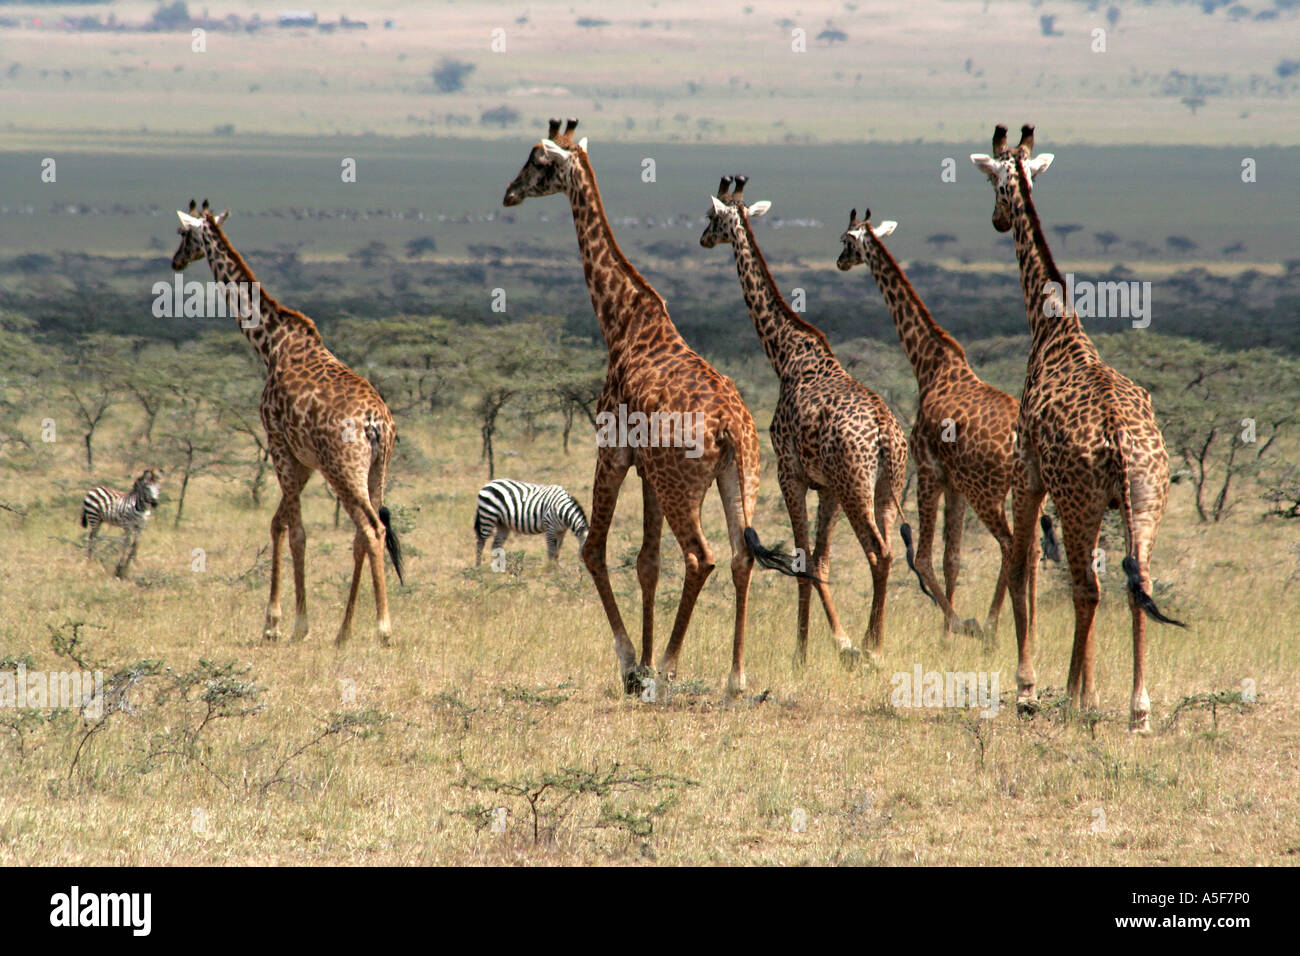 La giraffa, African Masai Giraffe, Masai Mara, Kenya, esecuzione di allevamento Foto Stock